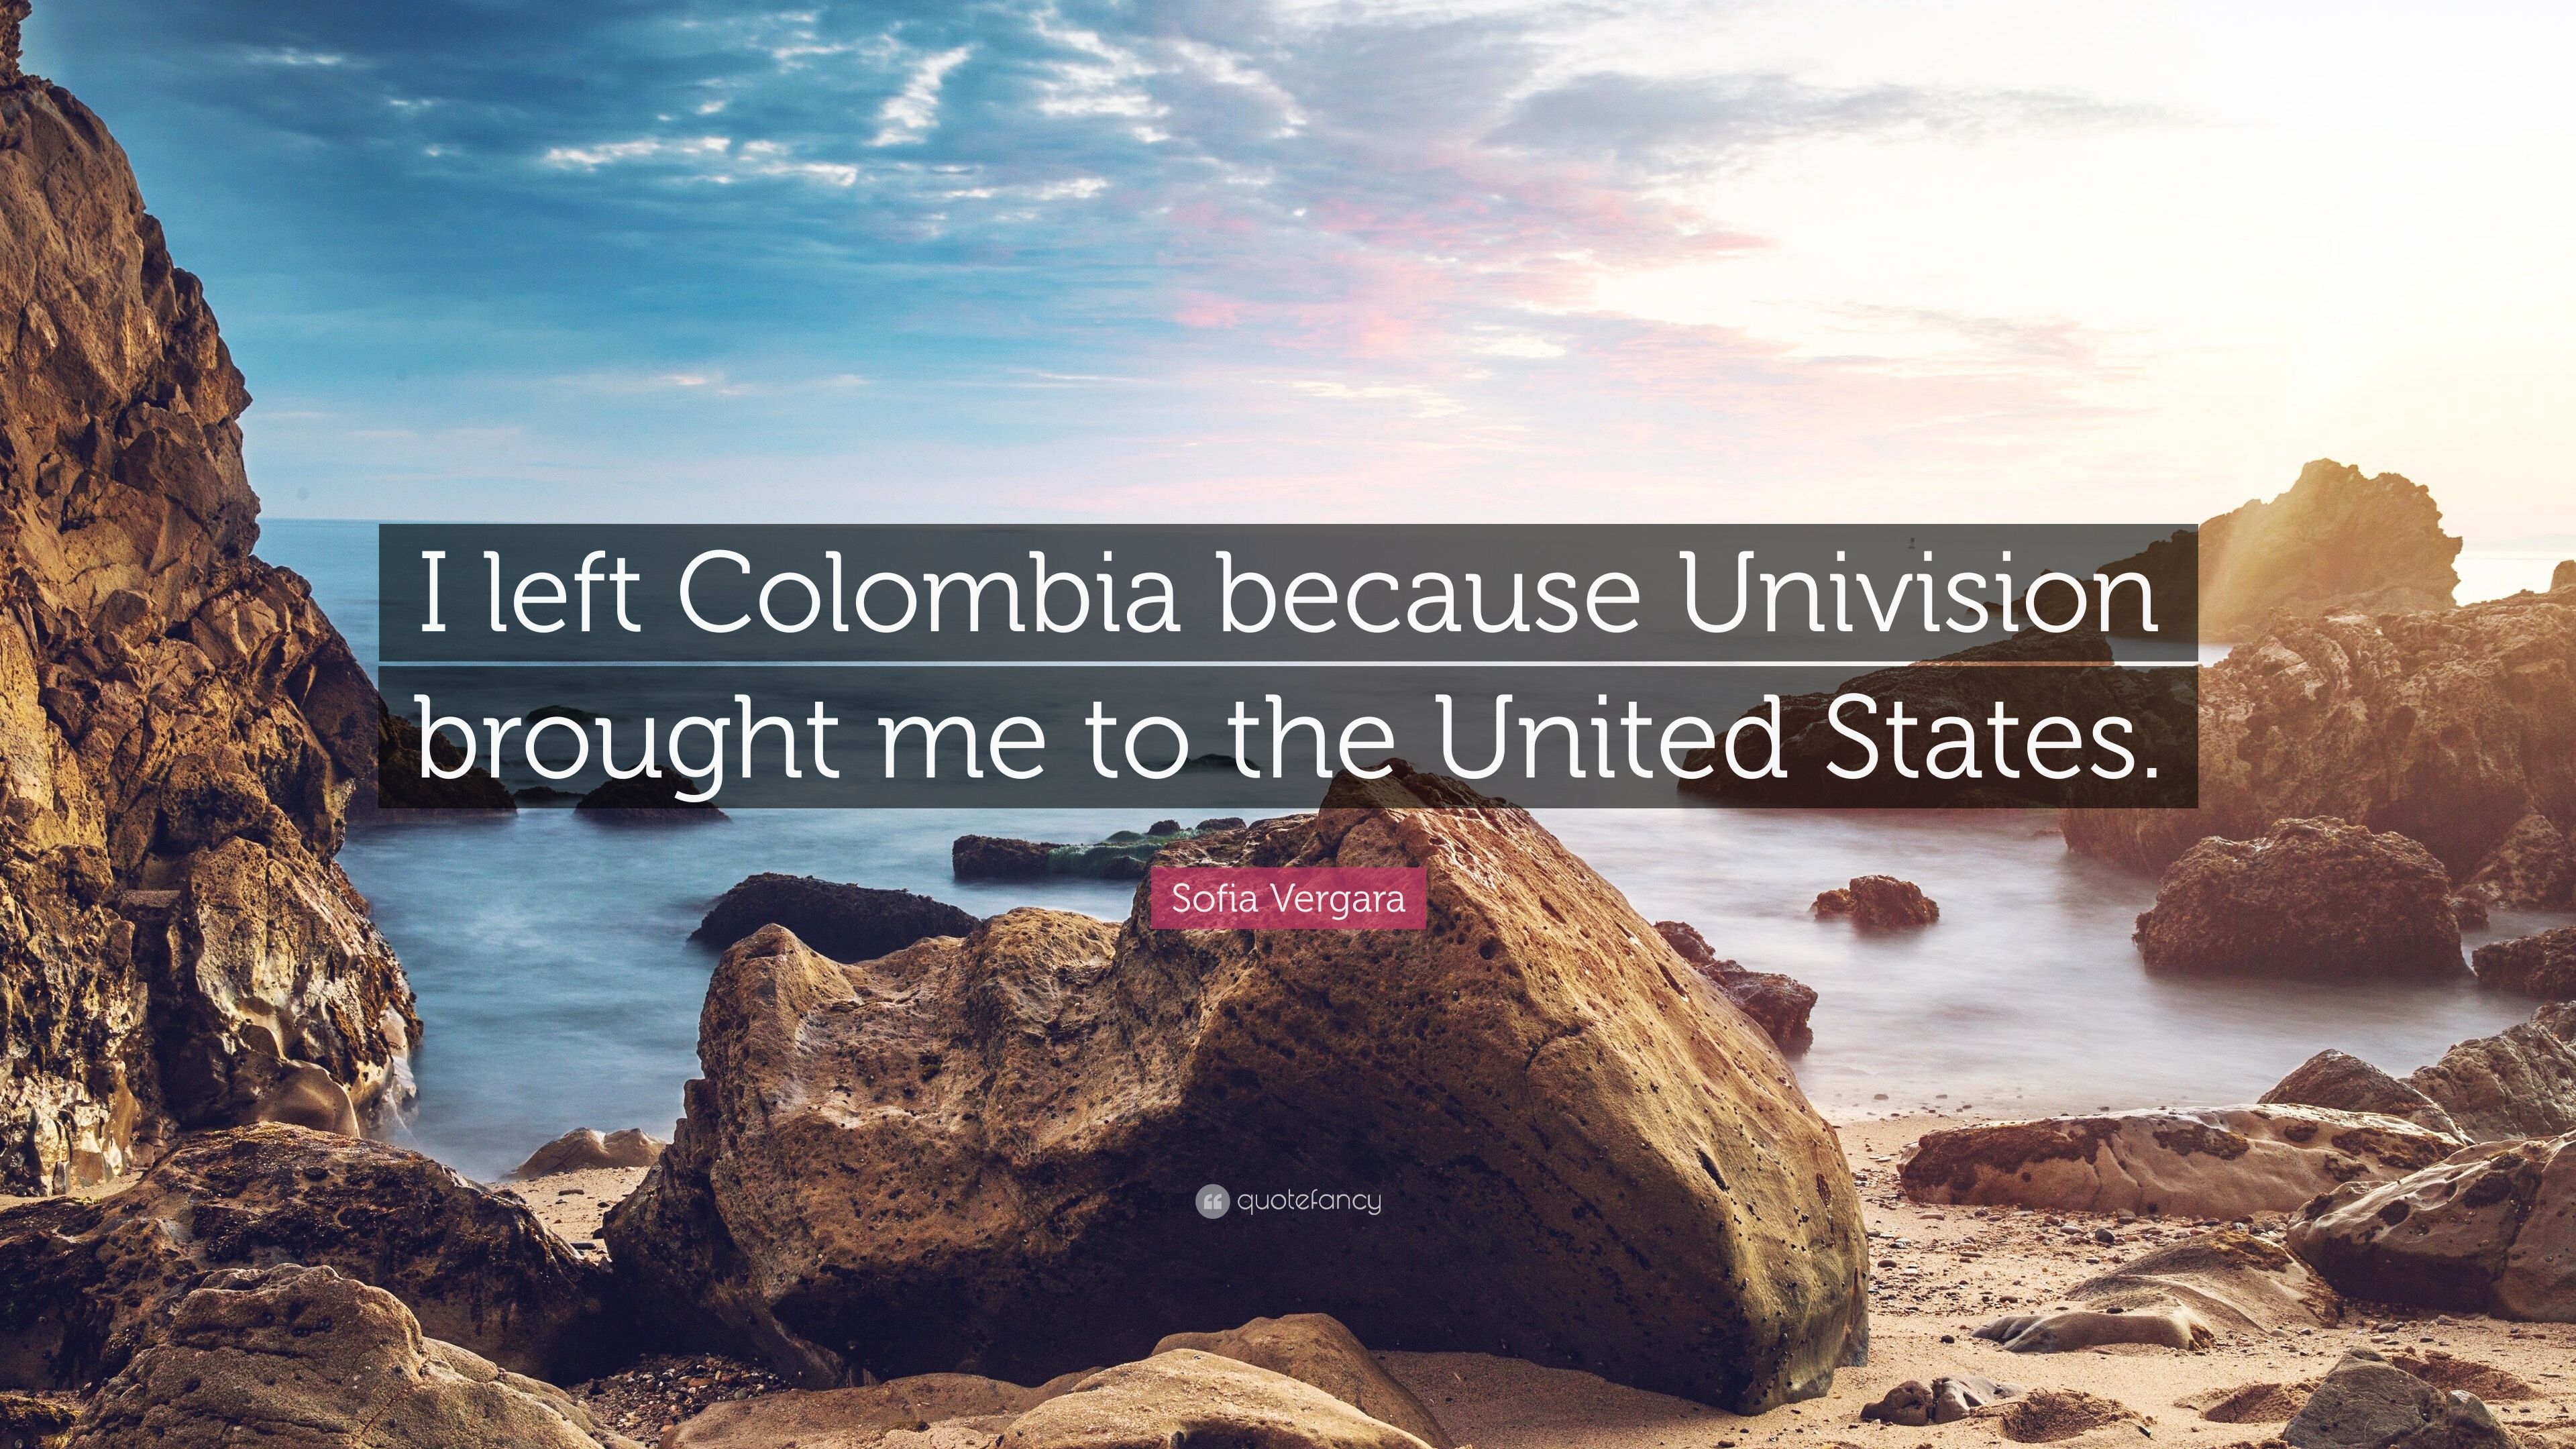 Sofia Vergara Quote: “I left Colombia because Univision brought me